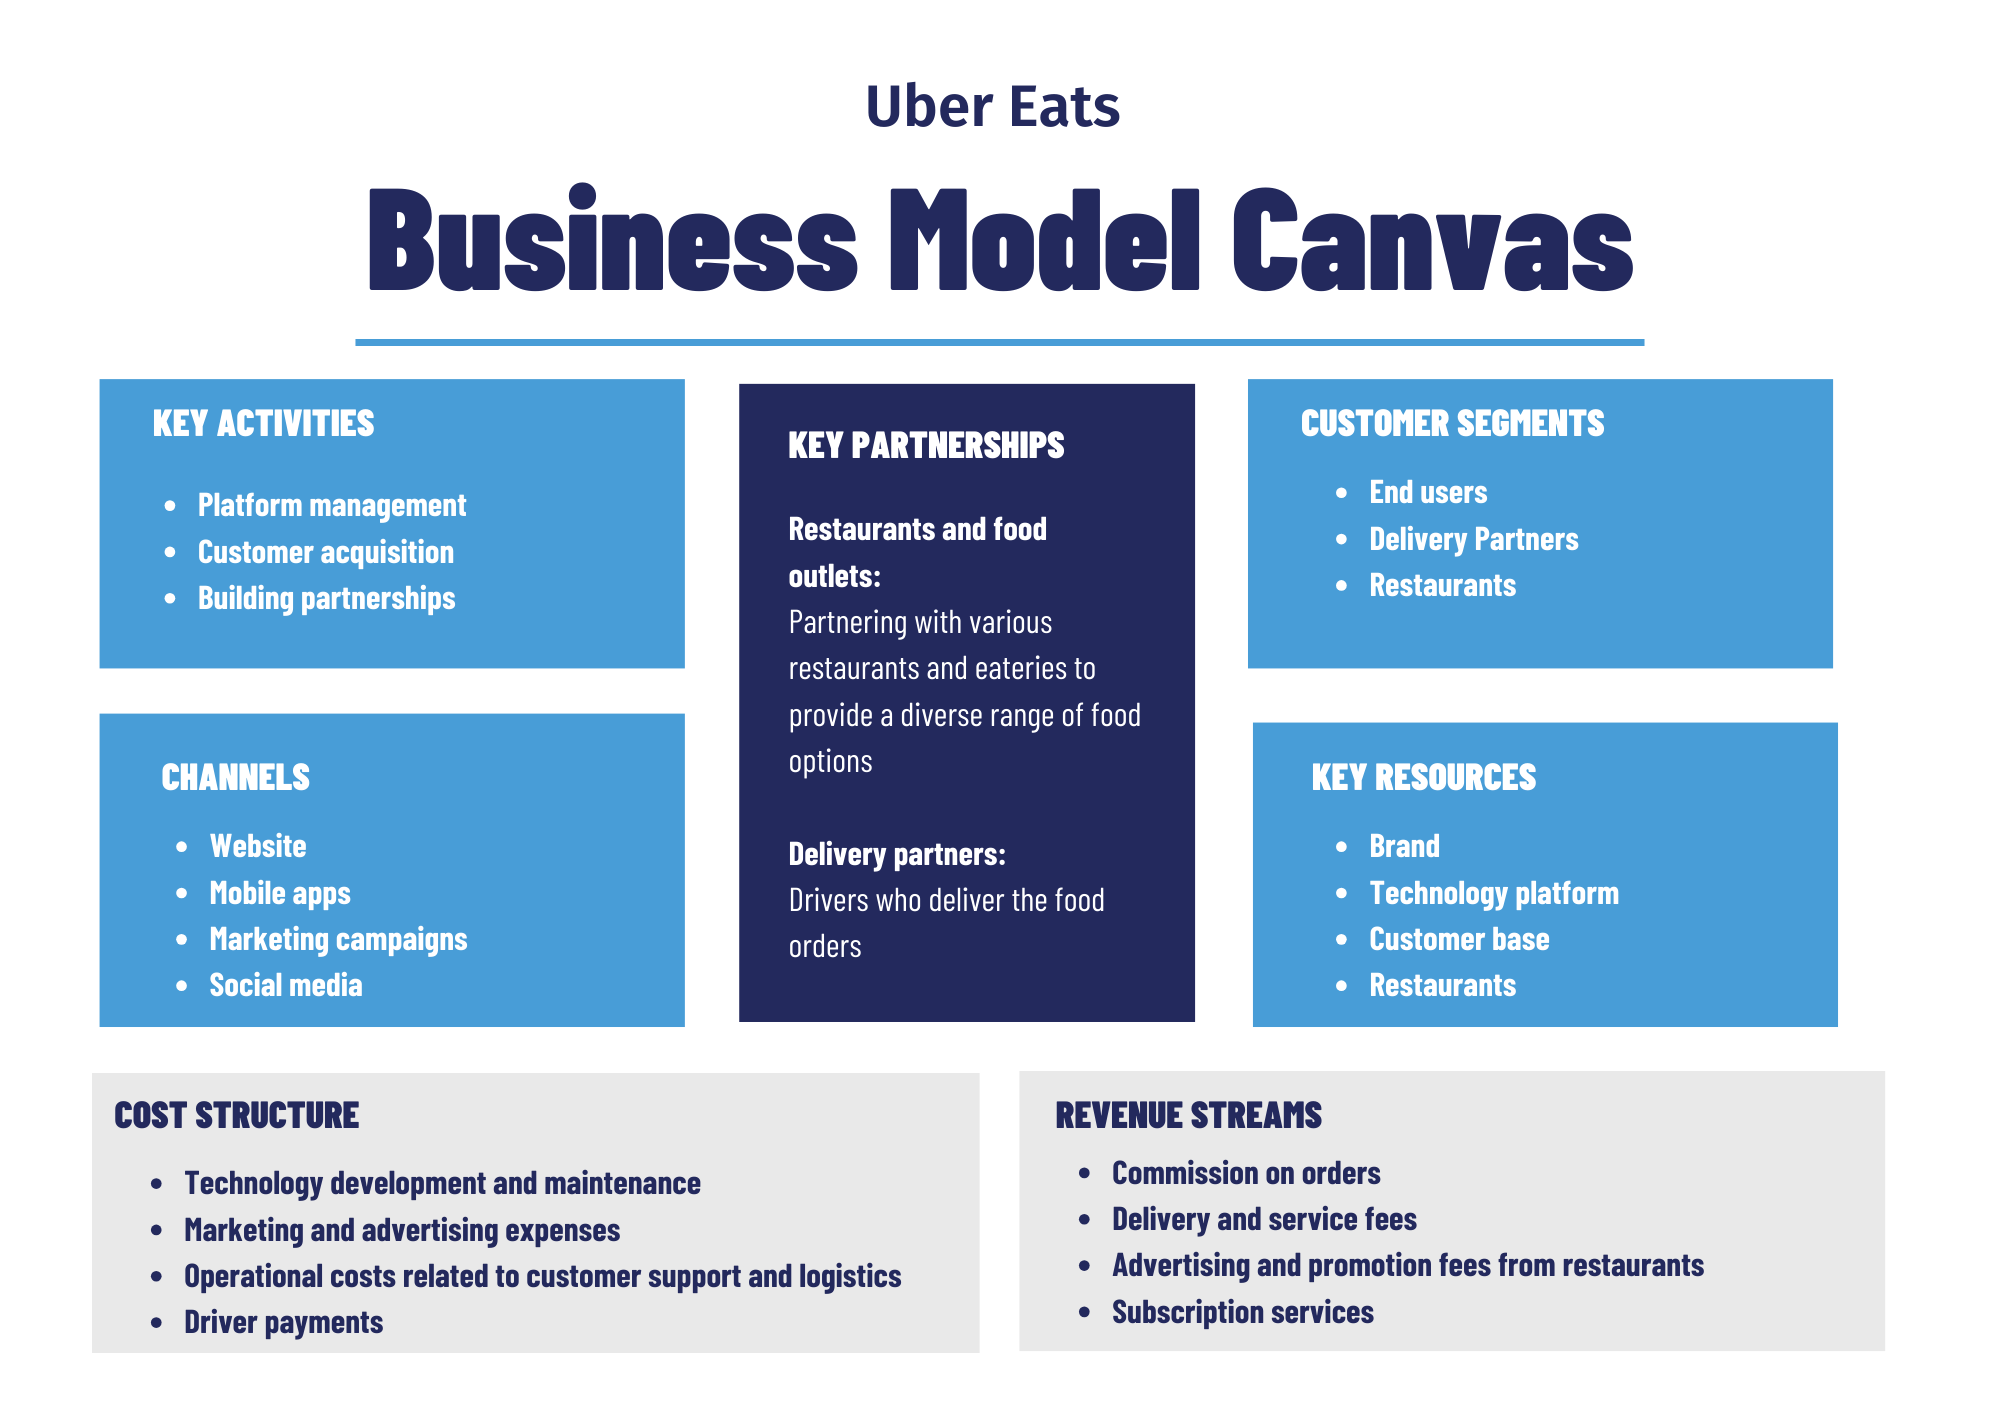 Uber Eats Business and Revenue Model